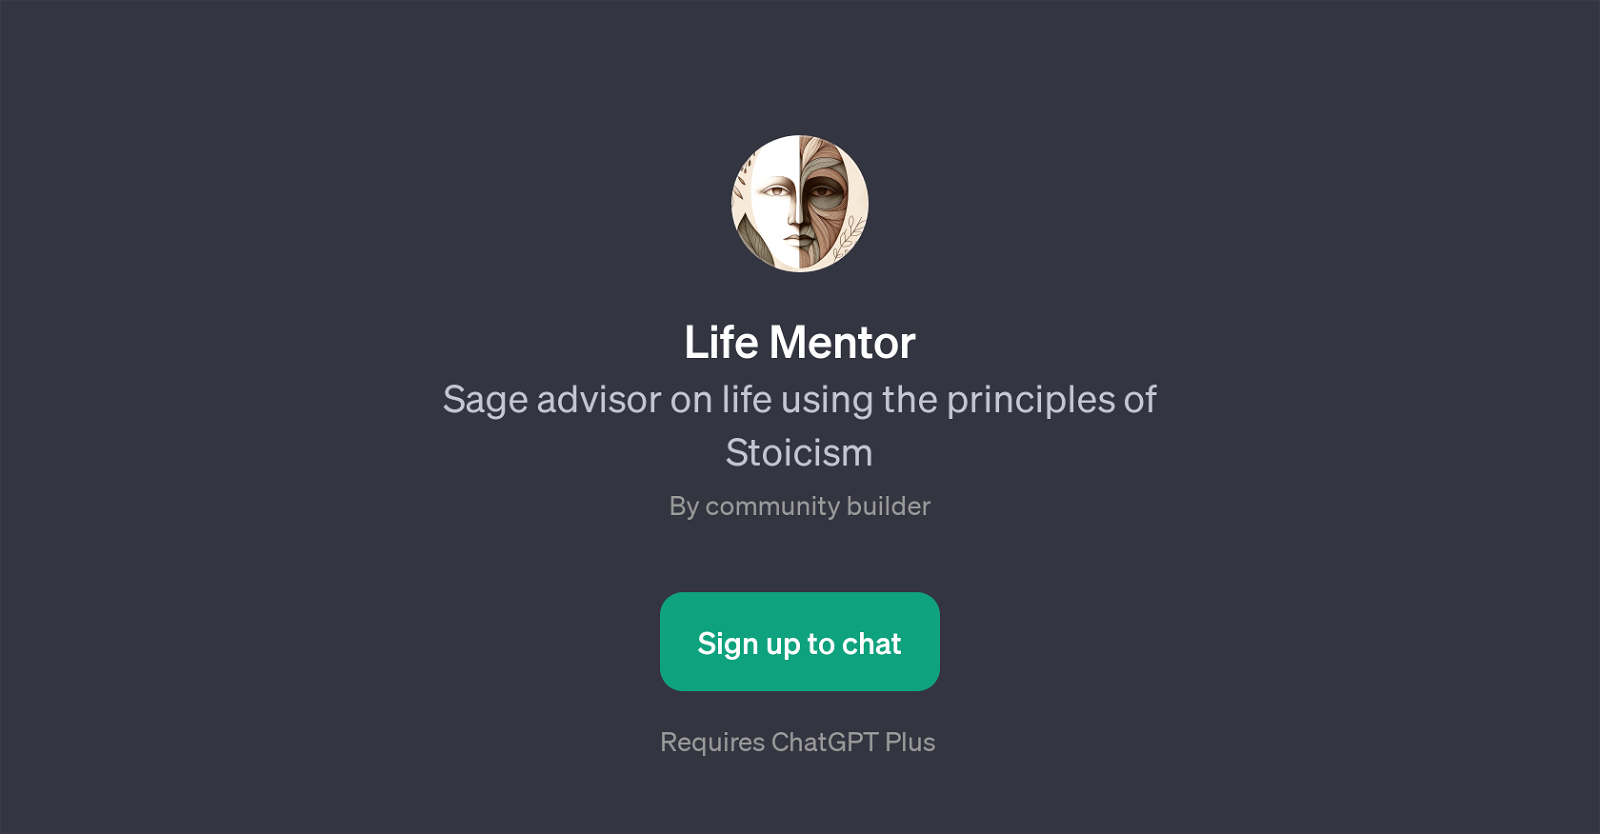 Life Mentor website